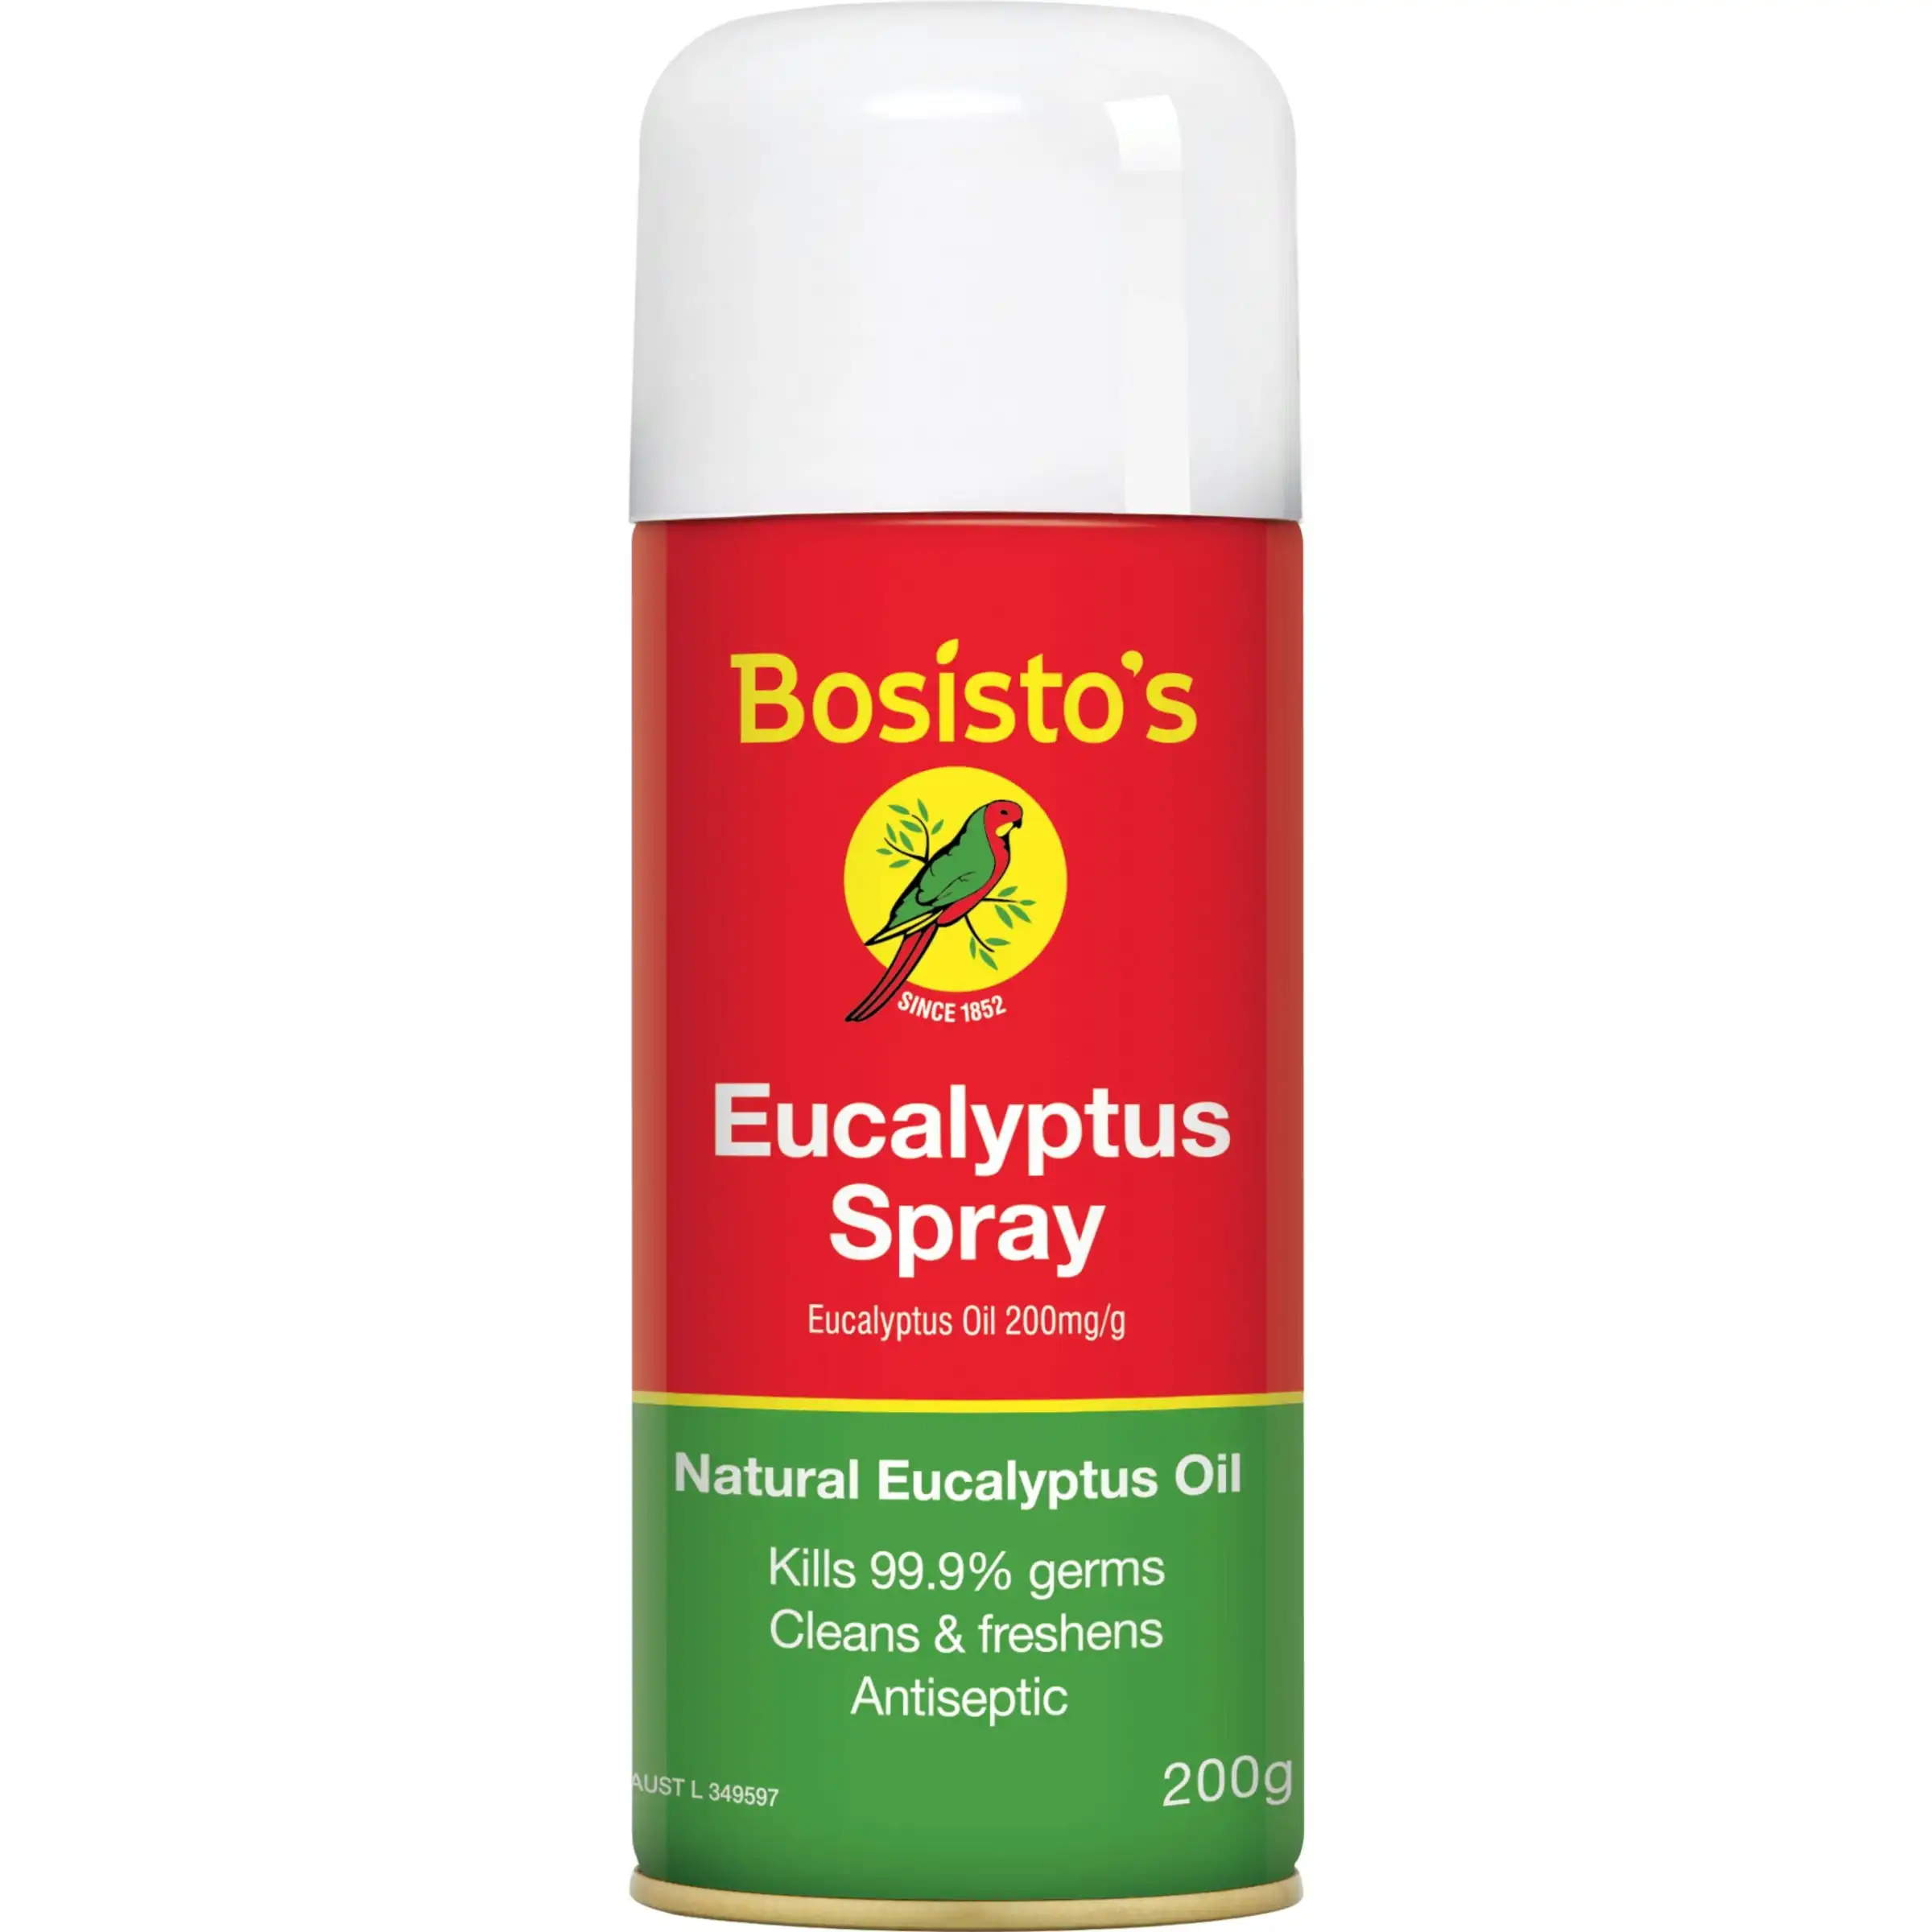 Bosisto's Eucalyptus Spray 200g